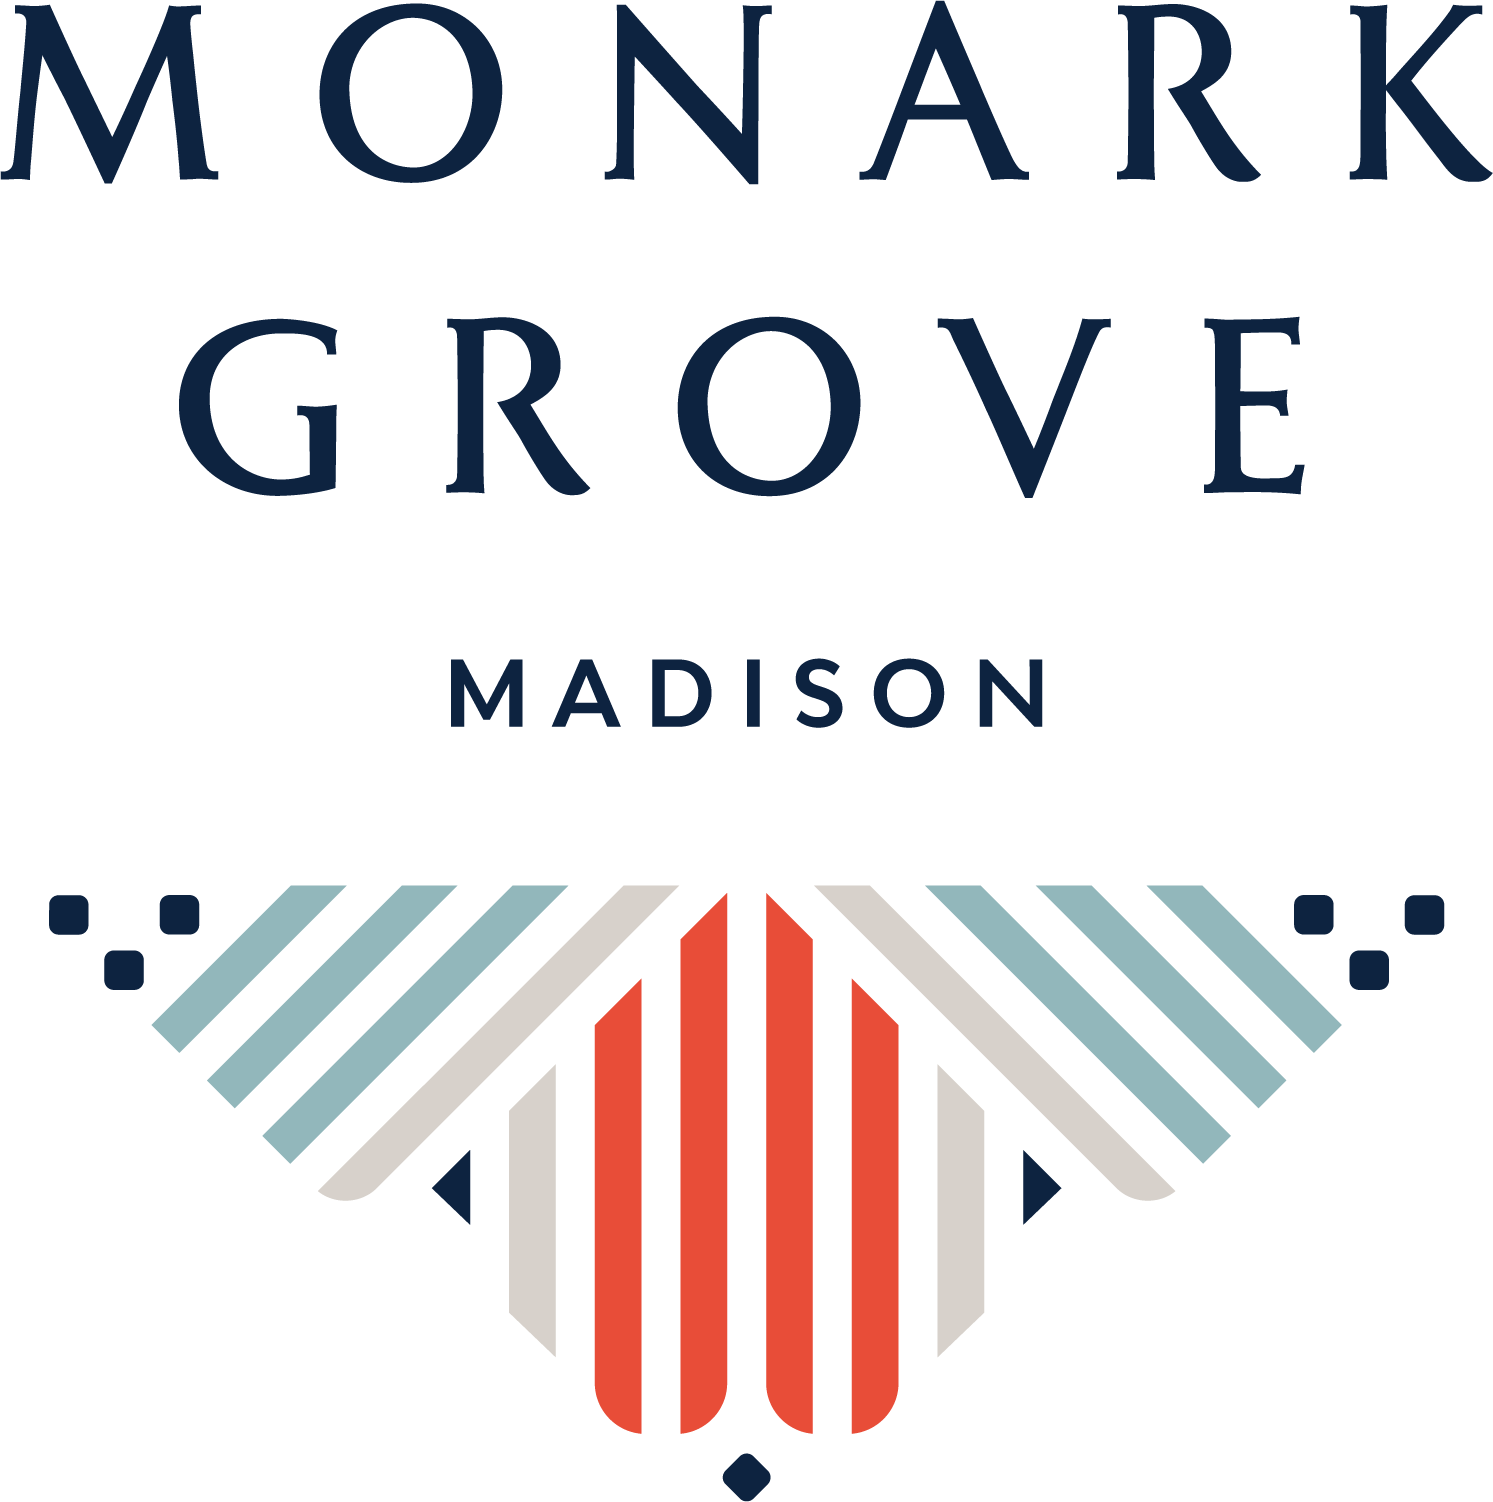 Monark Grove Madison